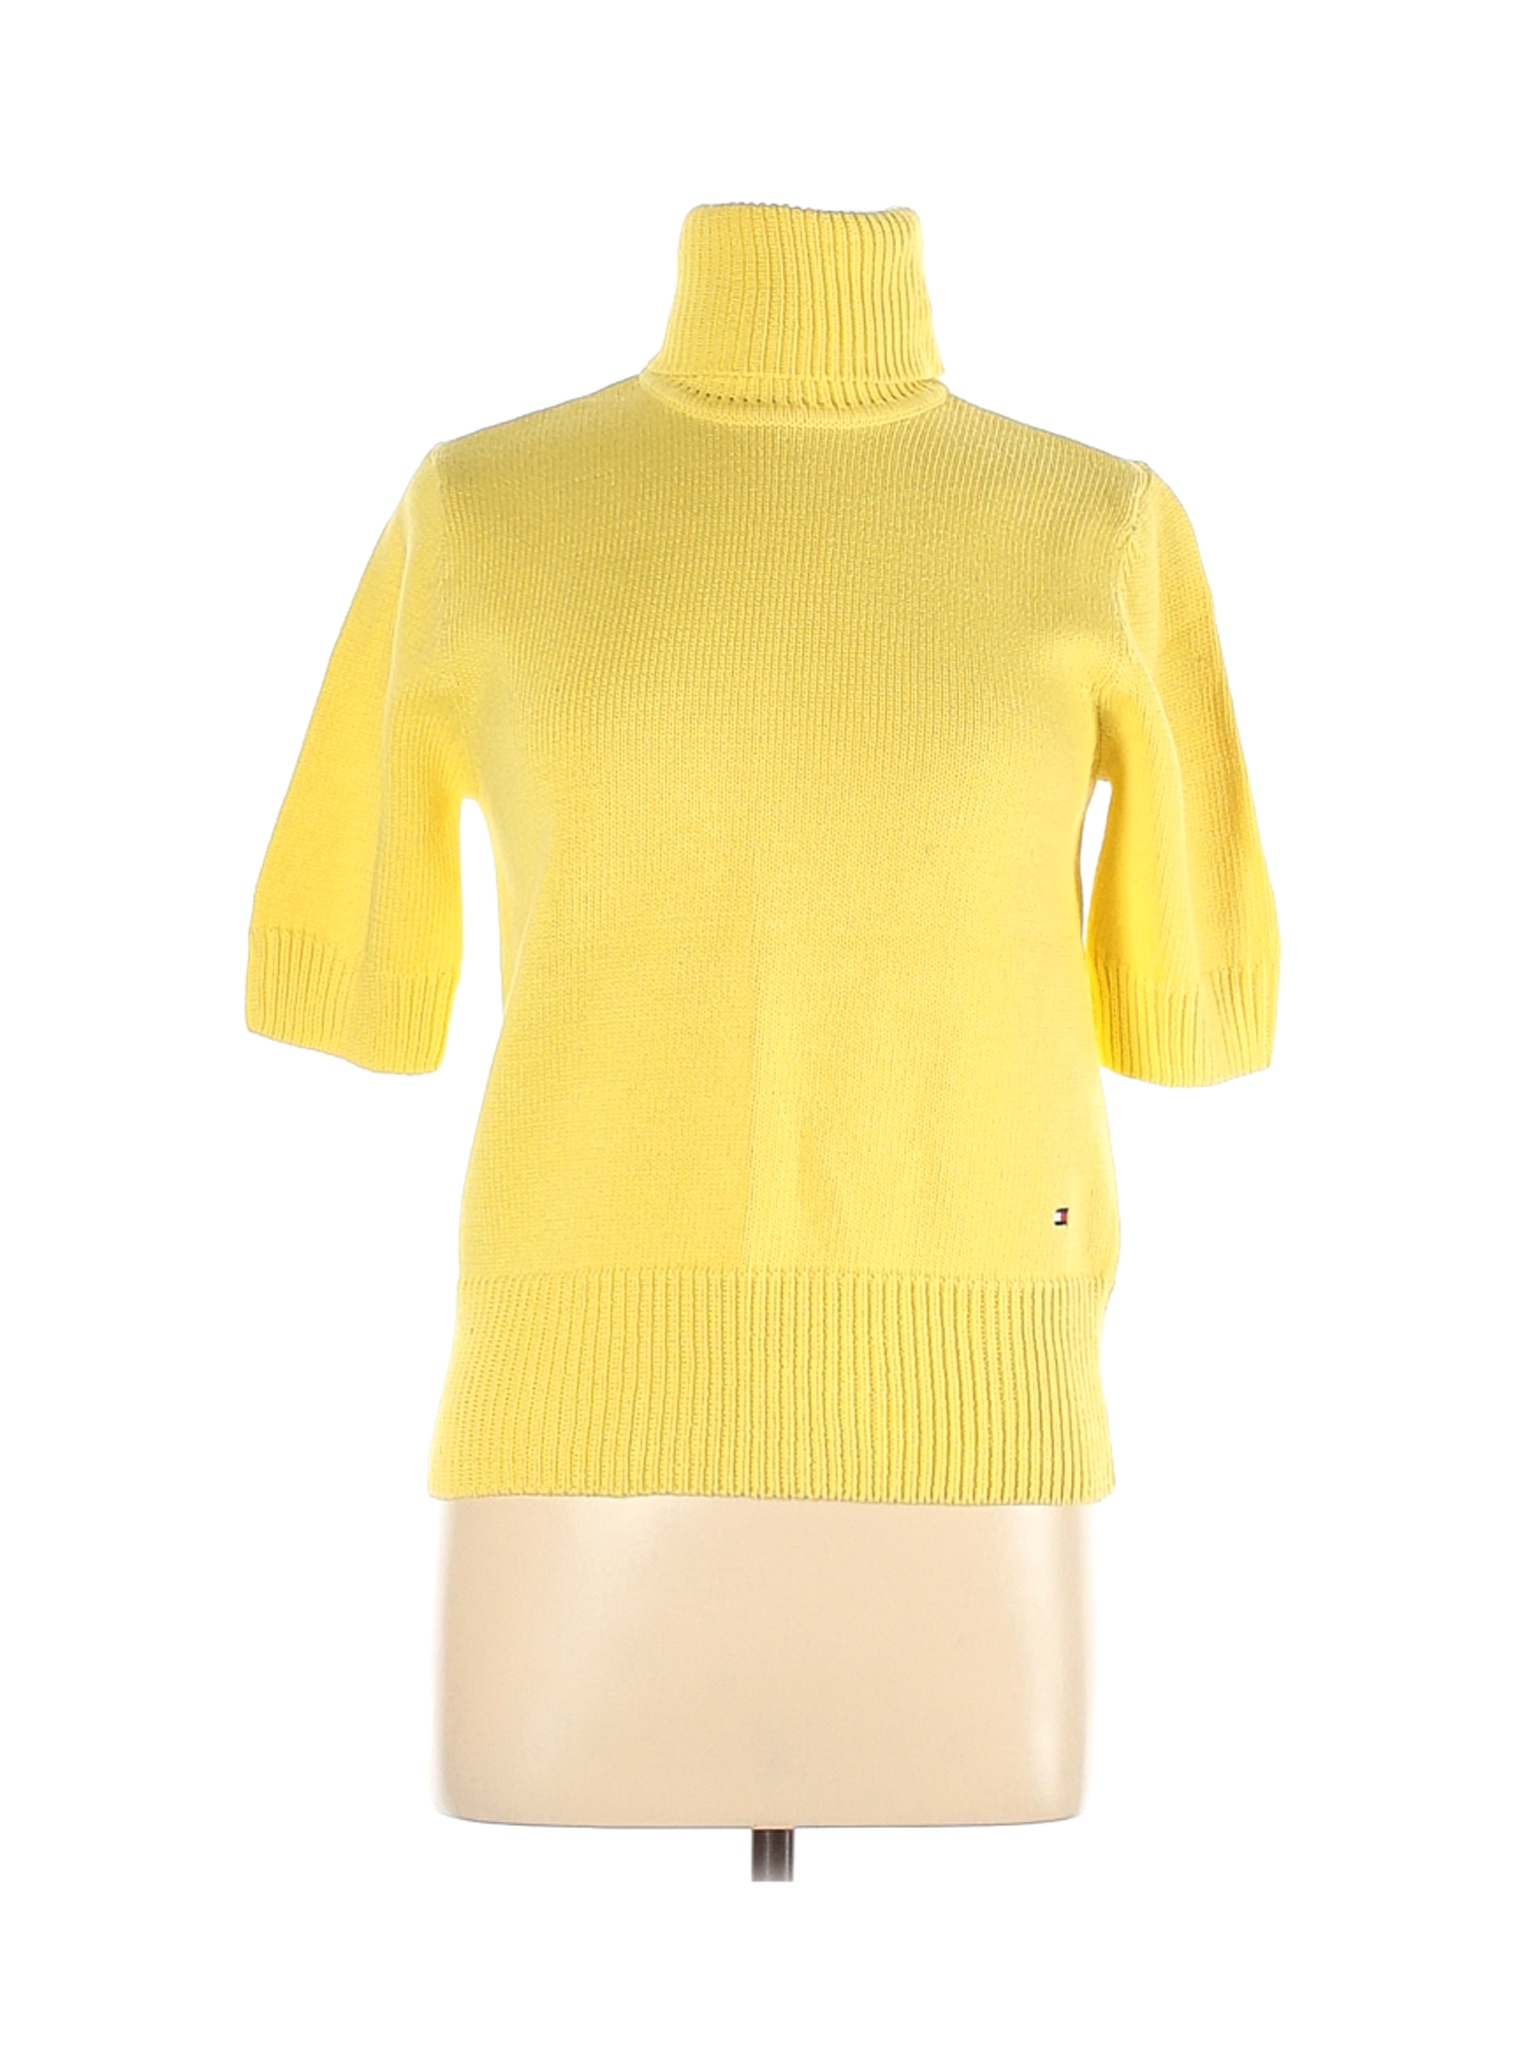 Tommy Hilfiger Women Yellow Turtleneck Sweater L Ebay